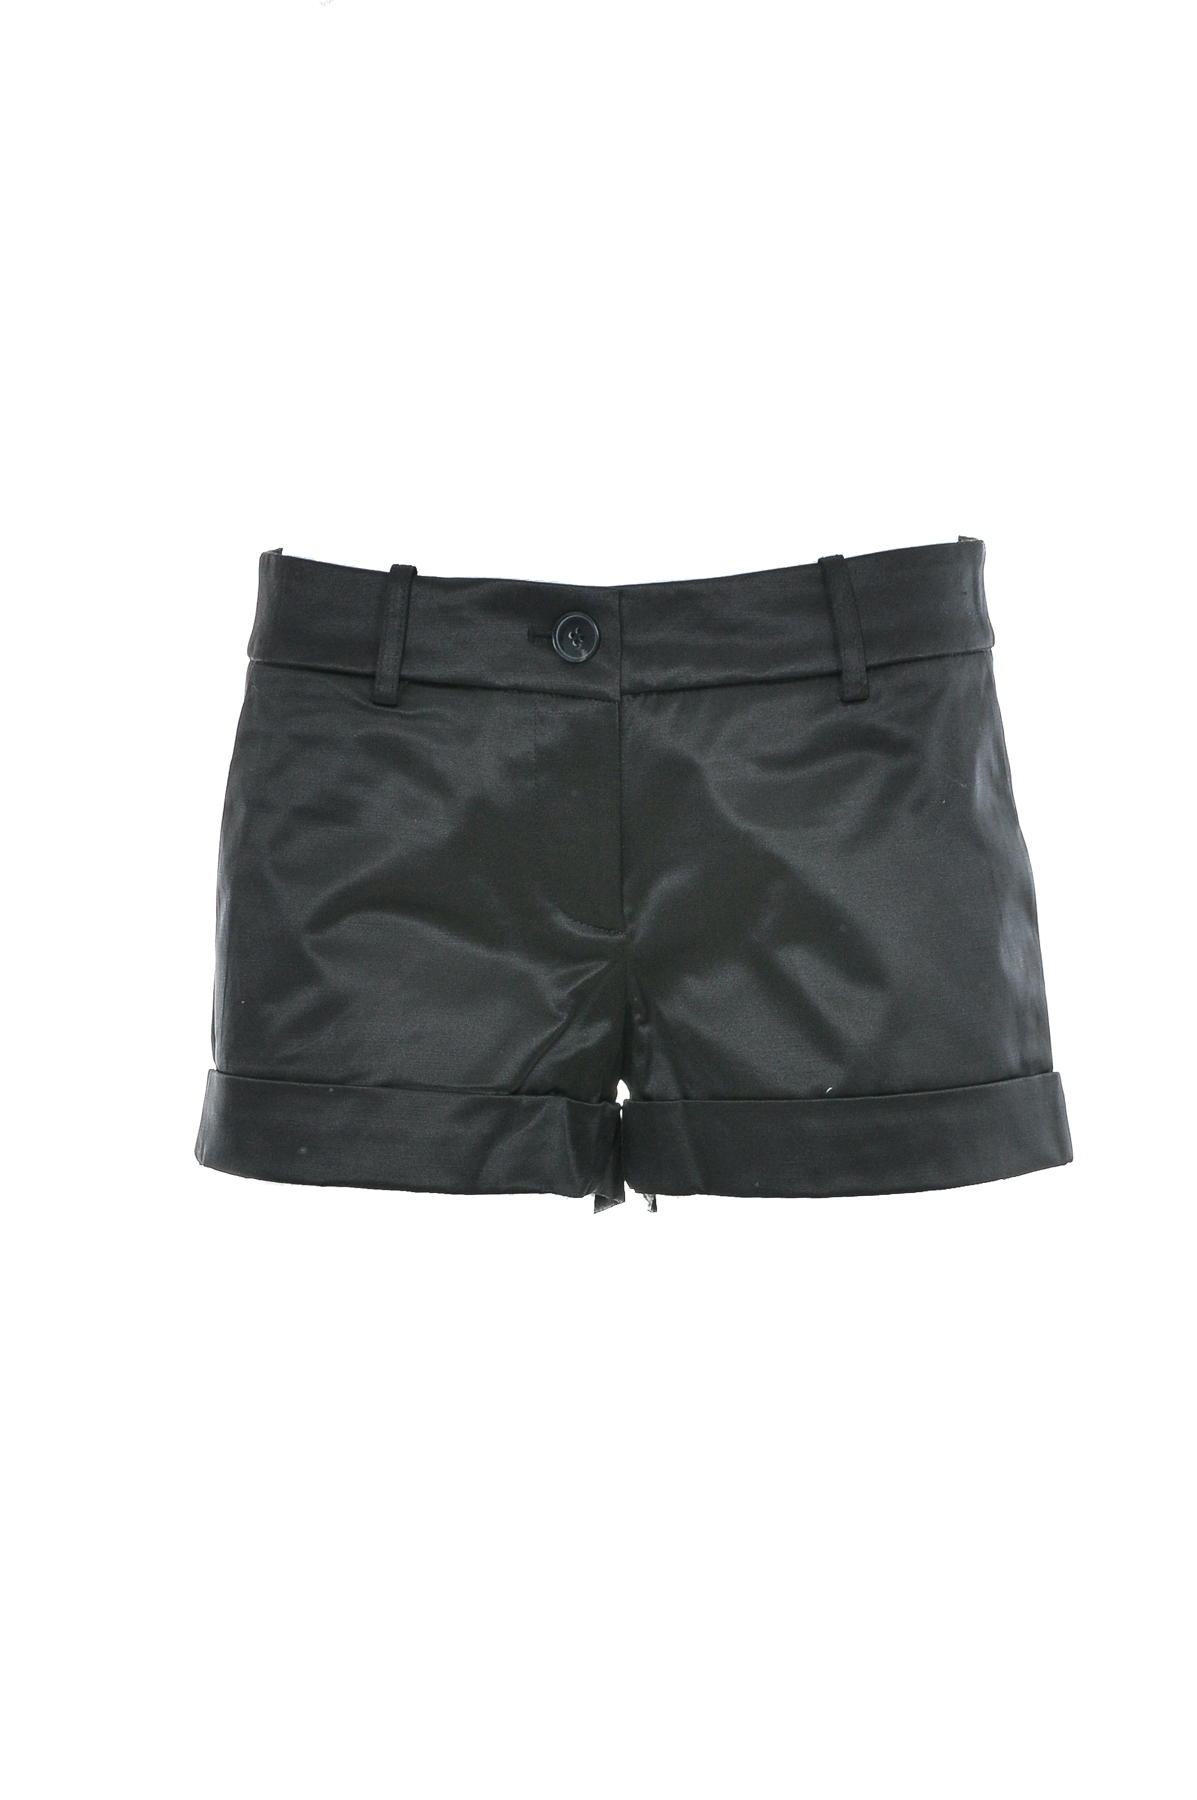 Female shorts - Bebe - 0